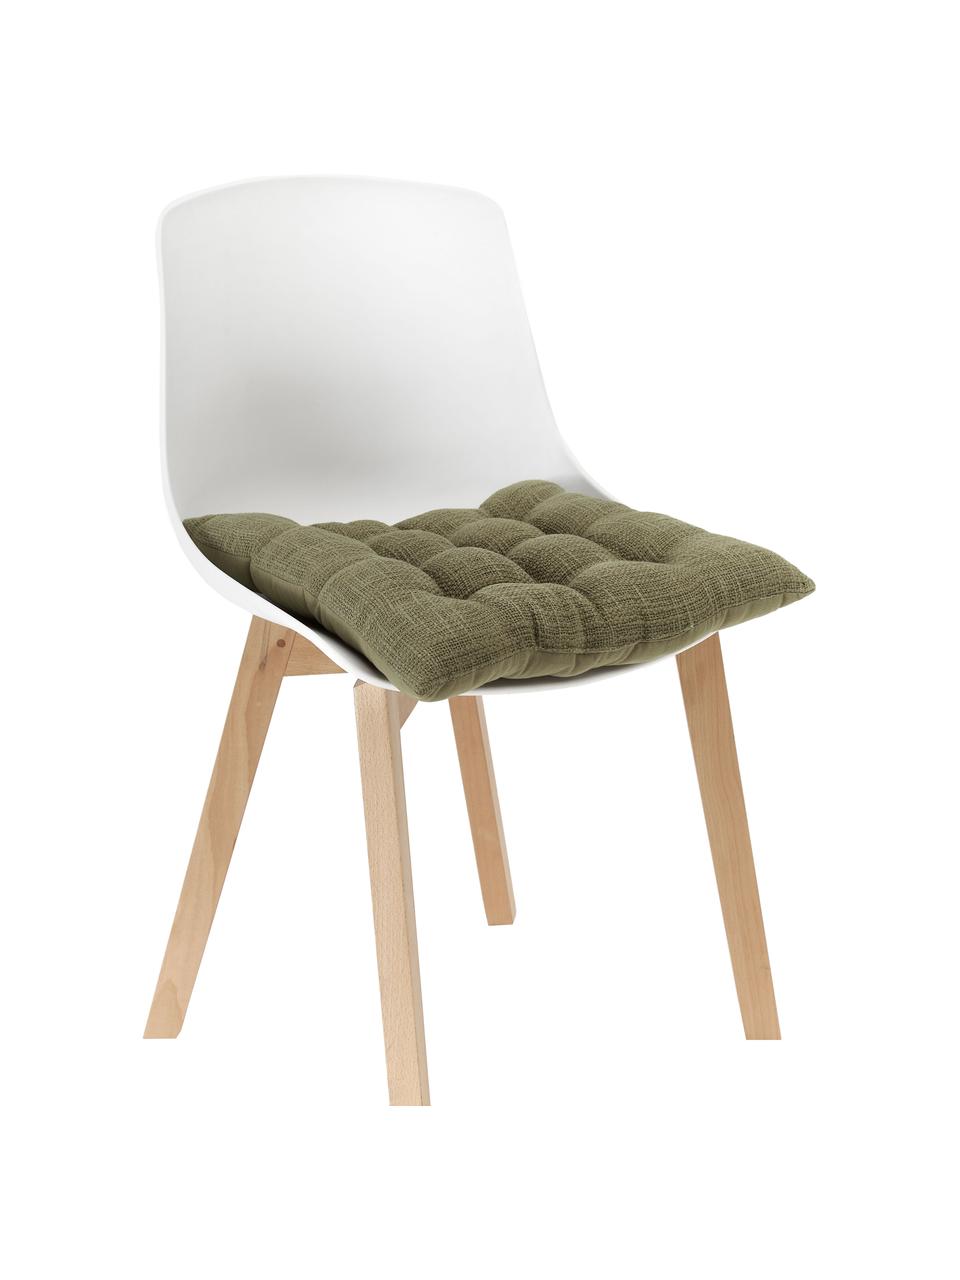 Baumwoll-Sitzkissen Sasha in Grün, Bezug: 100% Baumwolle, Grün, B 40 x L 40 cm